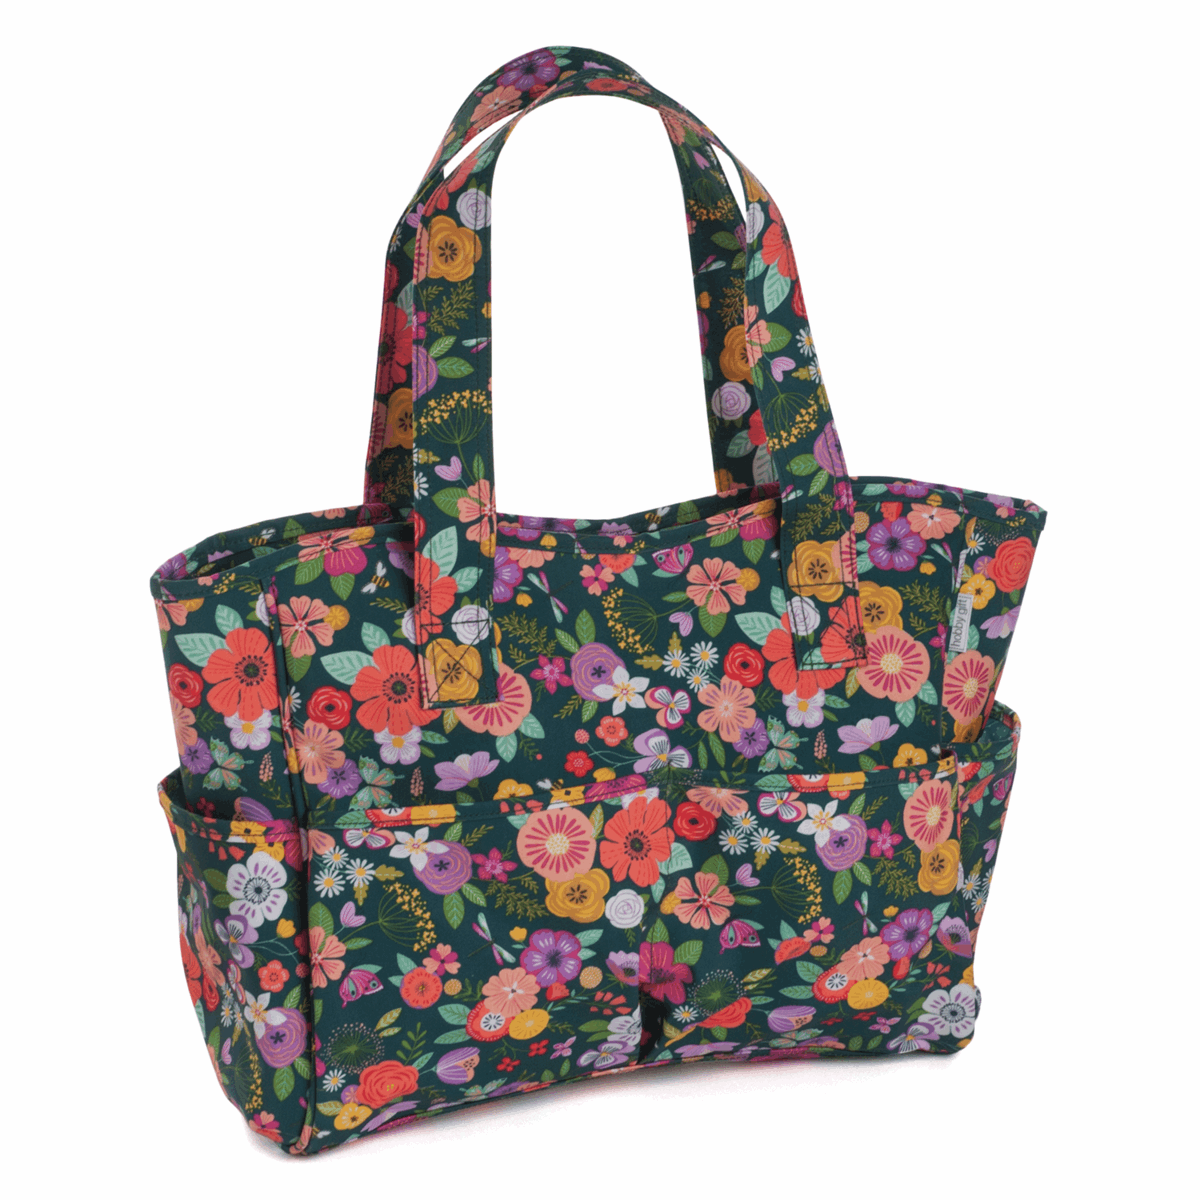 Deluxe Craft Bag - Teal Floral Garden